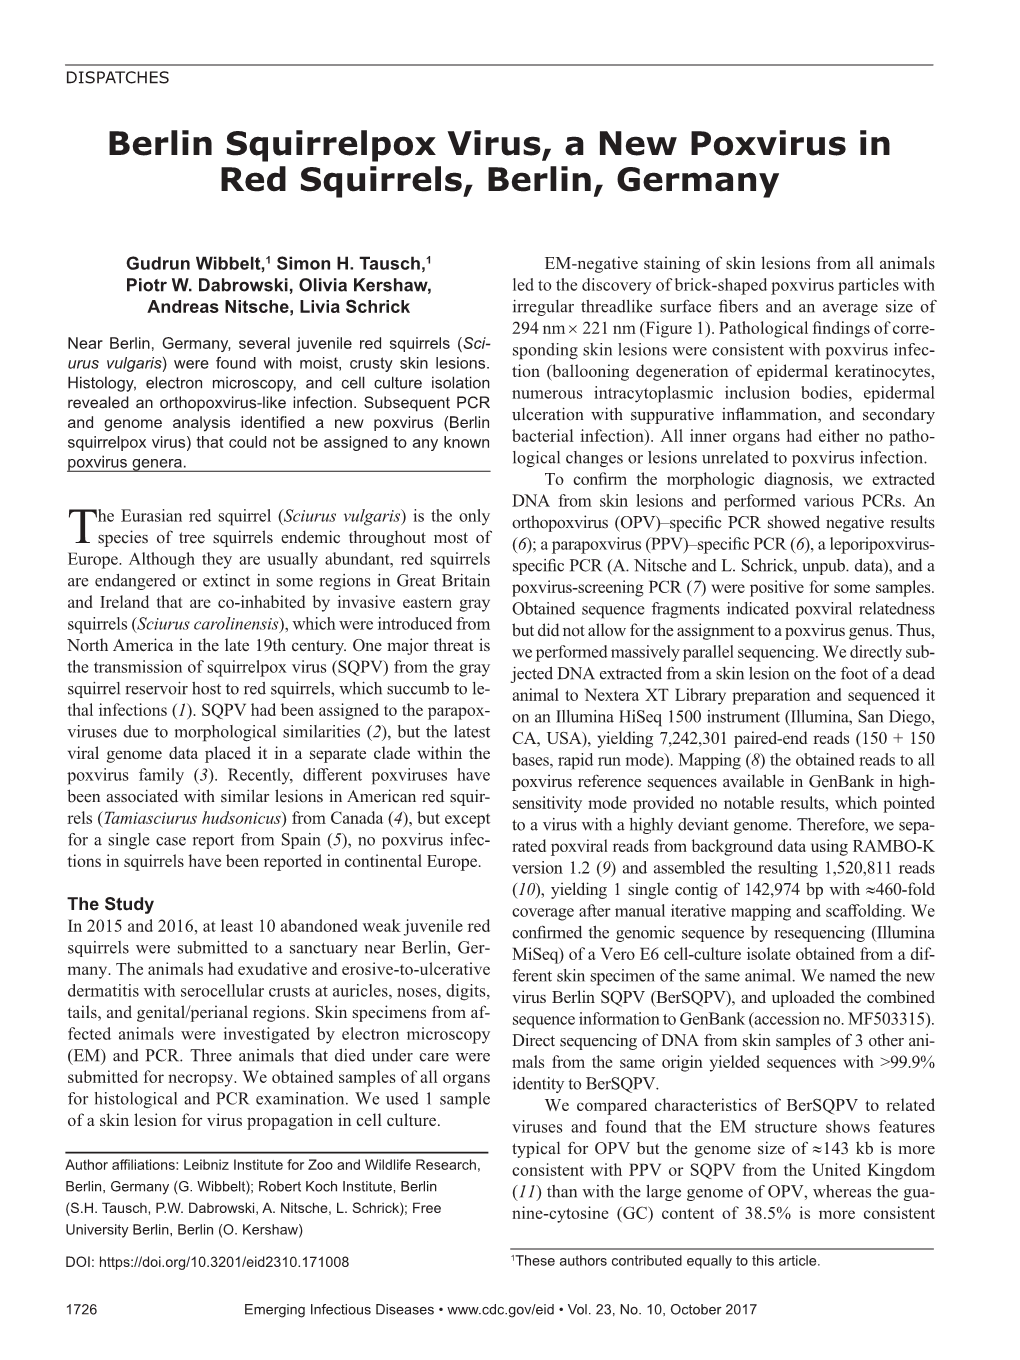 Berlin Squirrelpox Virus, a New Poxvirus in Red Squirrels, Berlin, Germany